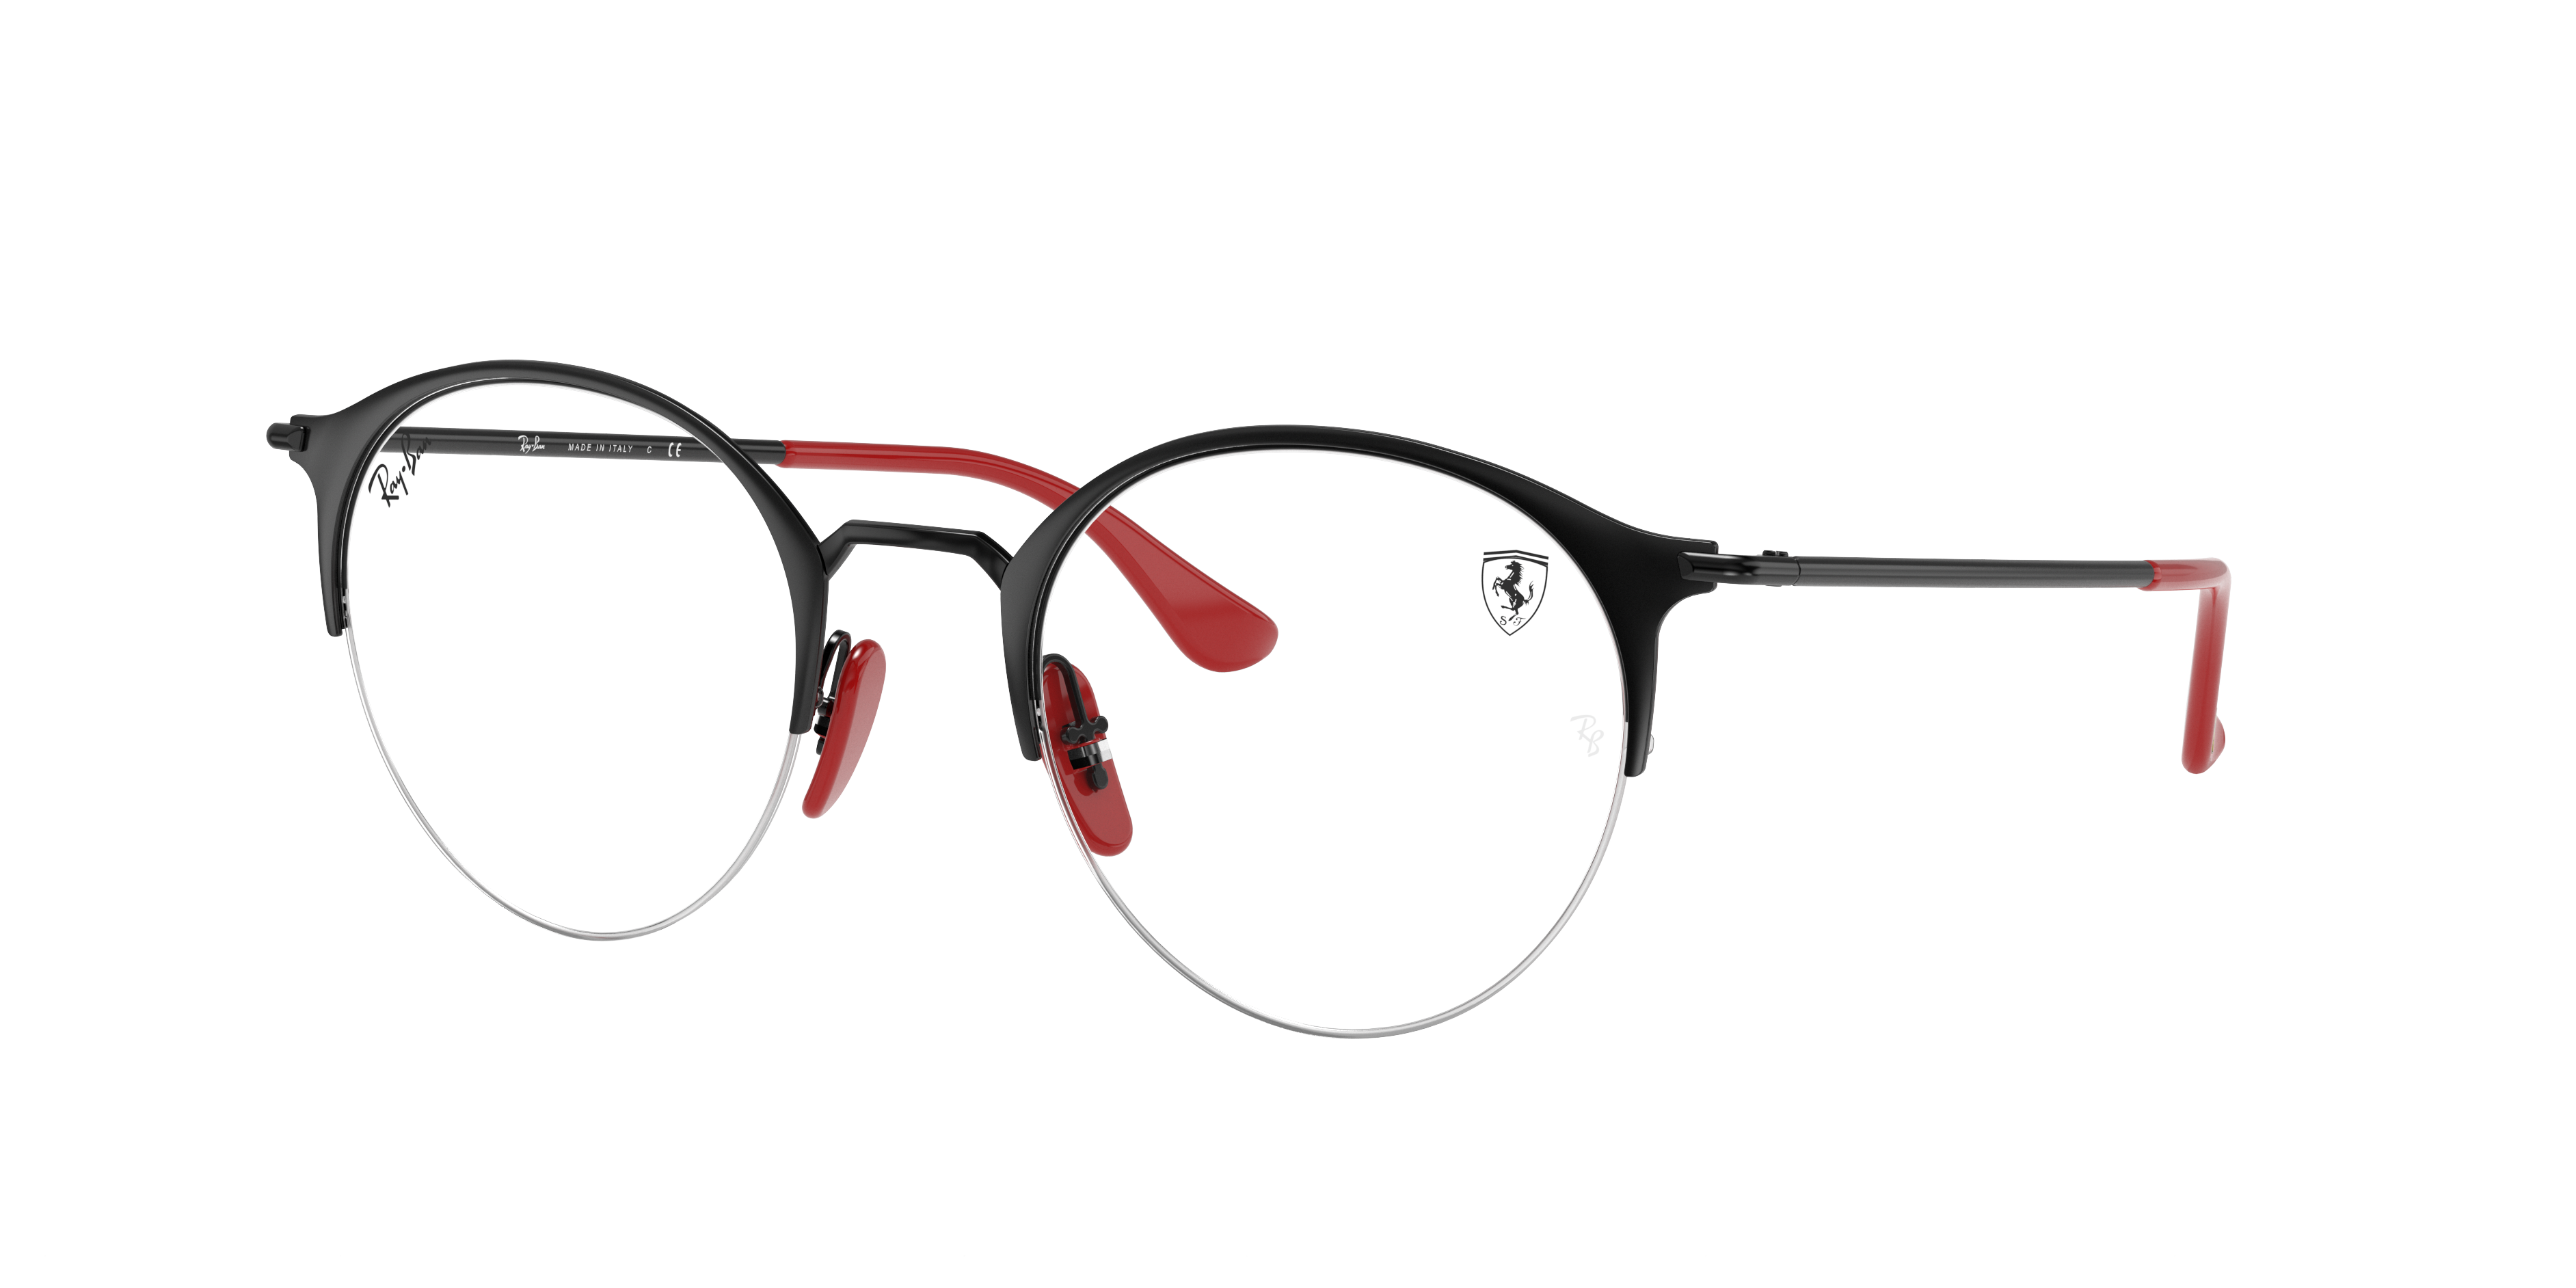 Rb3578vm Scuderia Ferrari Collection Eyeglasses with Black Frame | Ray-Ban®